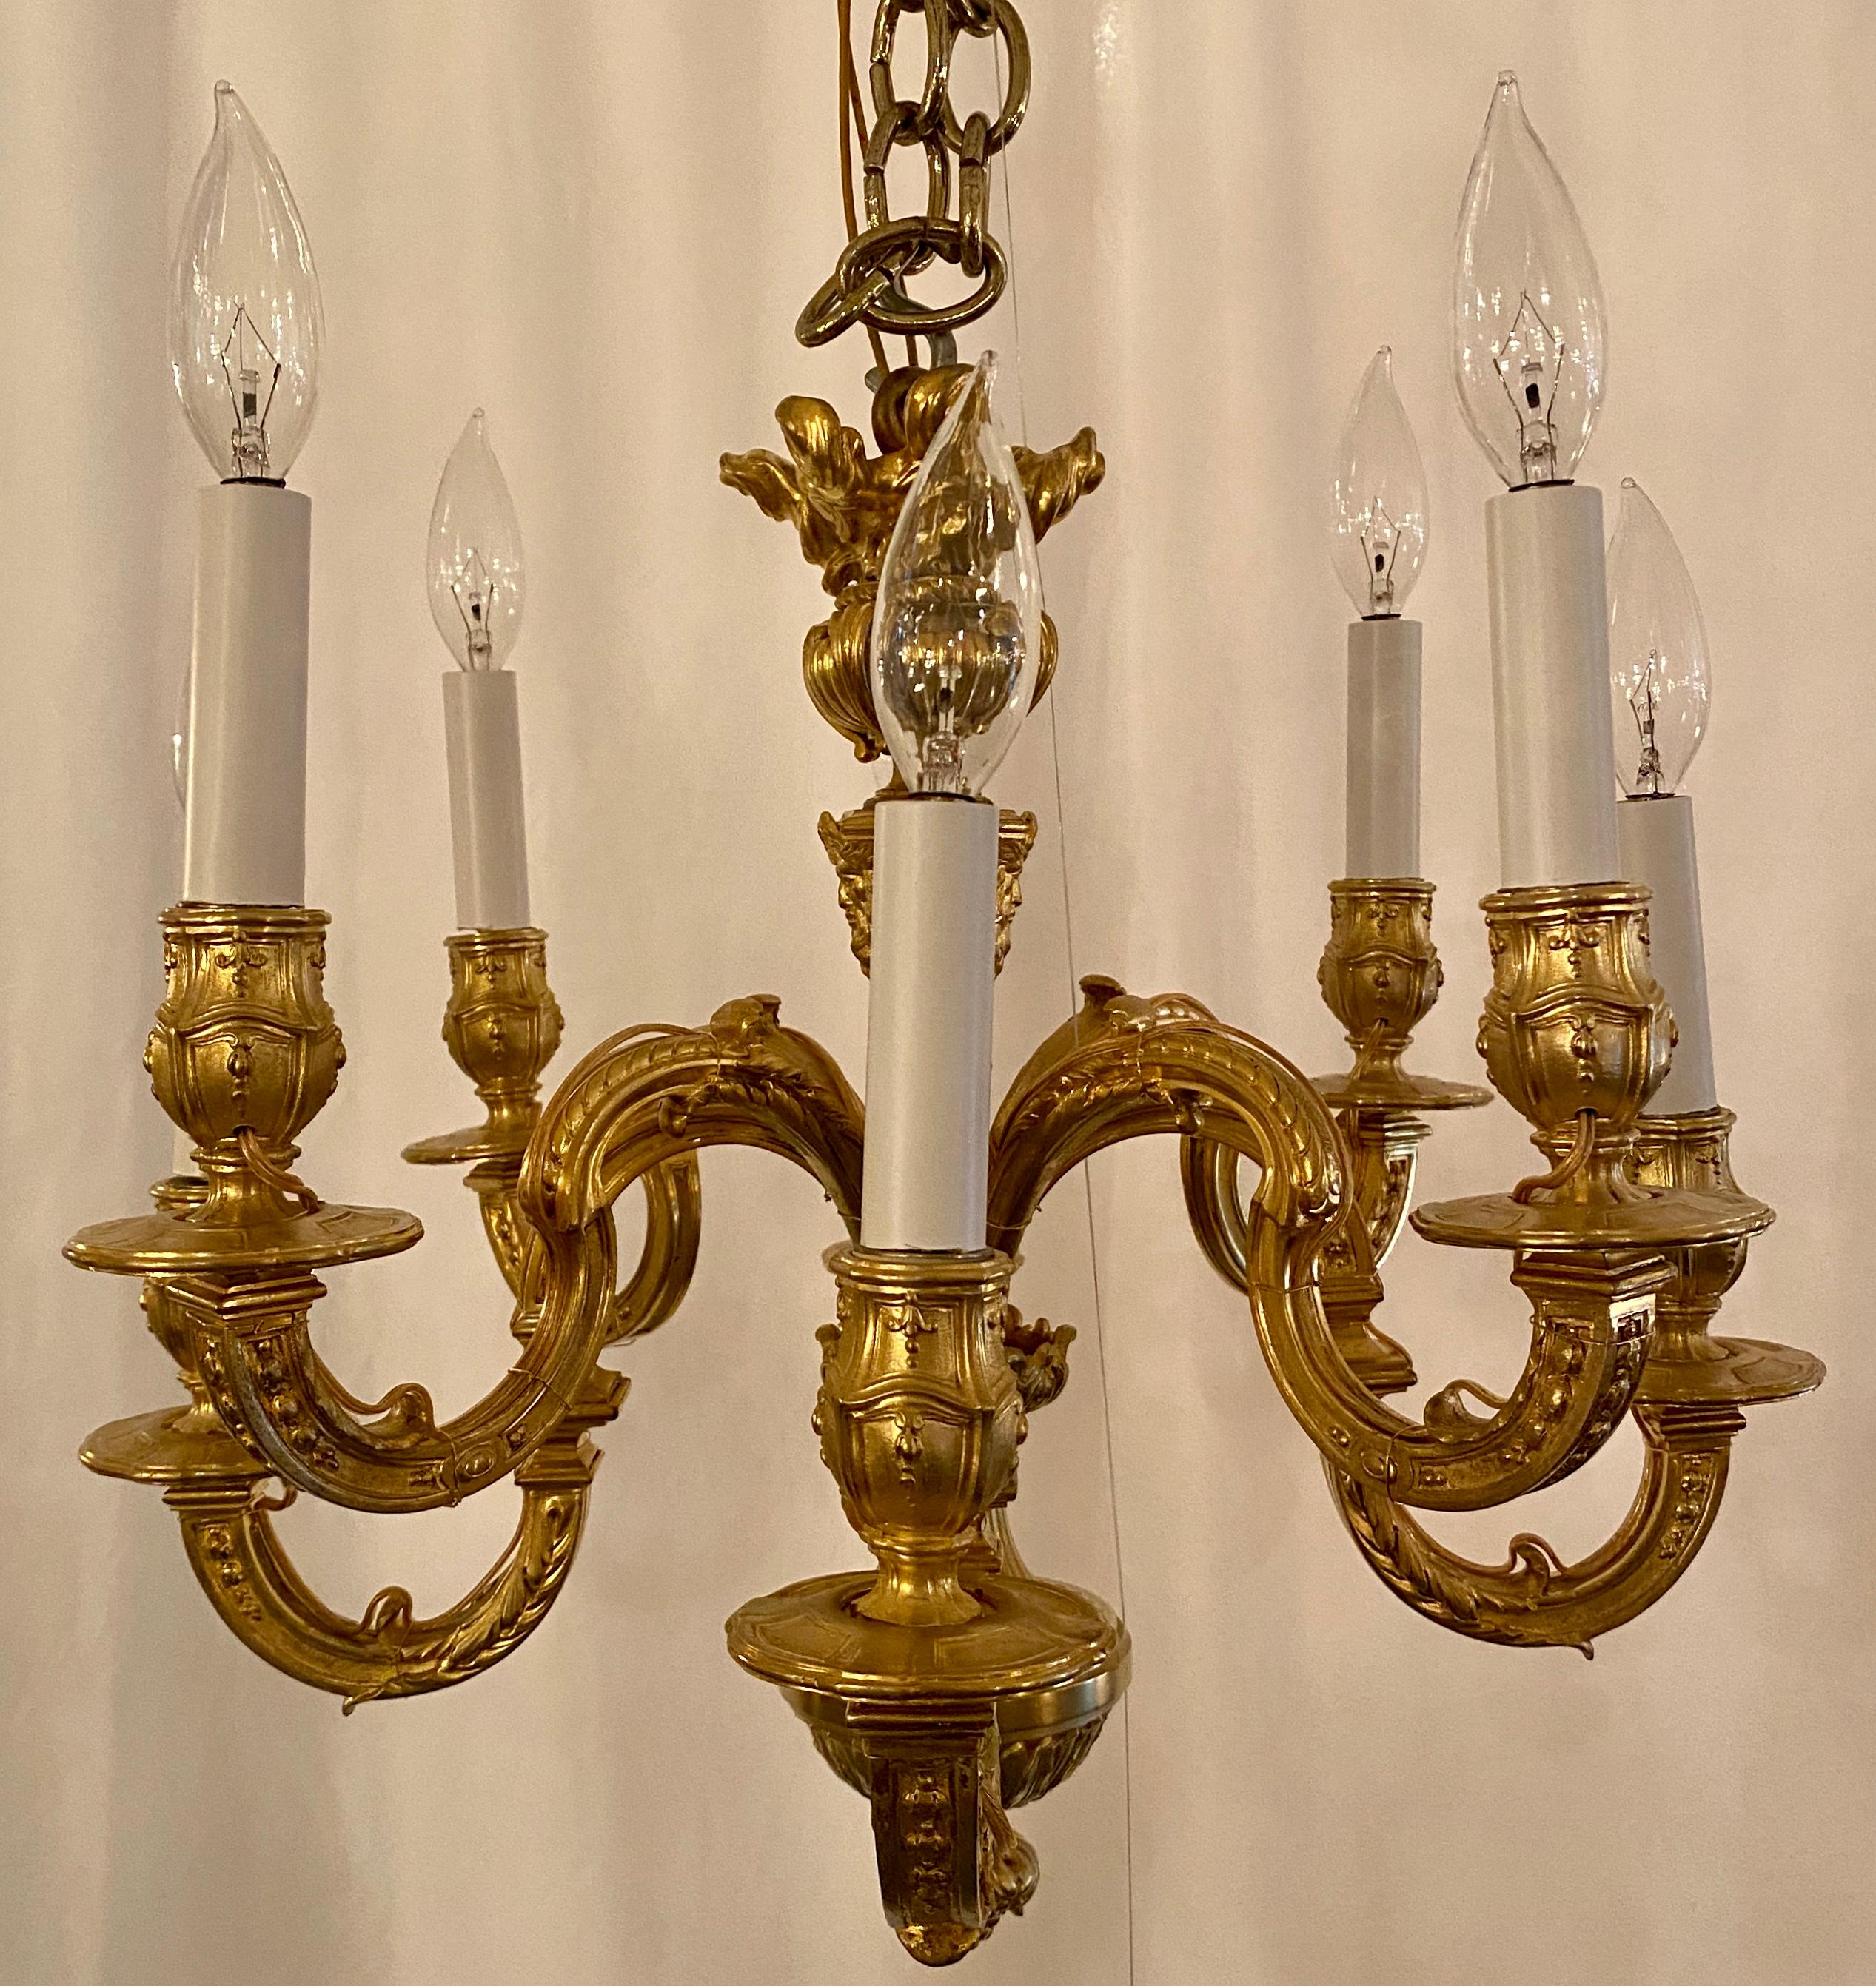 Antique French bronze doré Louis XIV style chandelier, circa 1890.
CHB154.